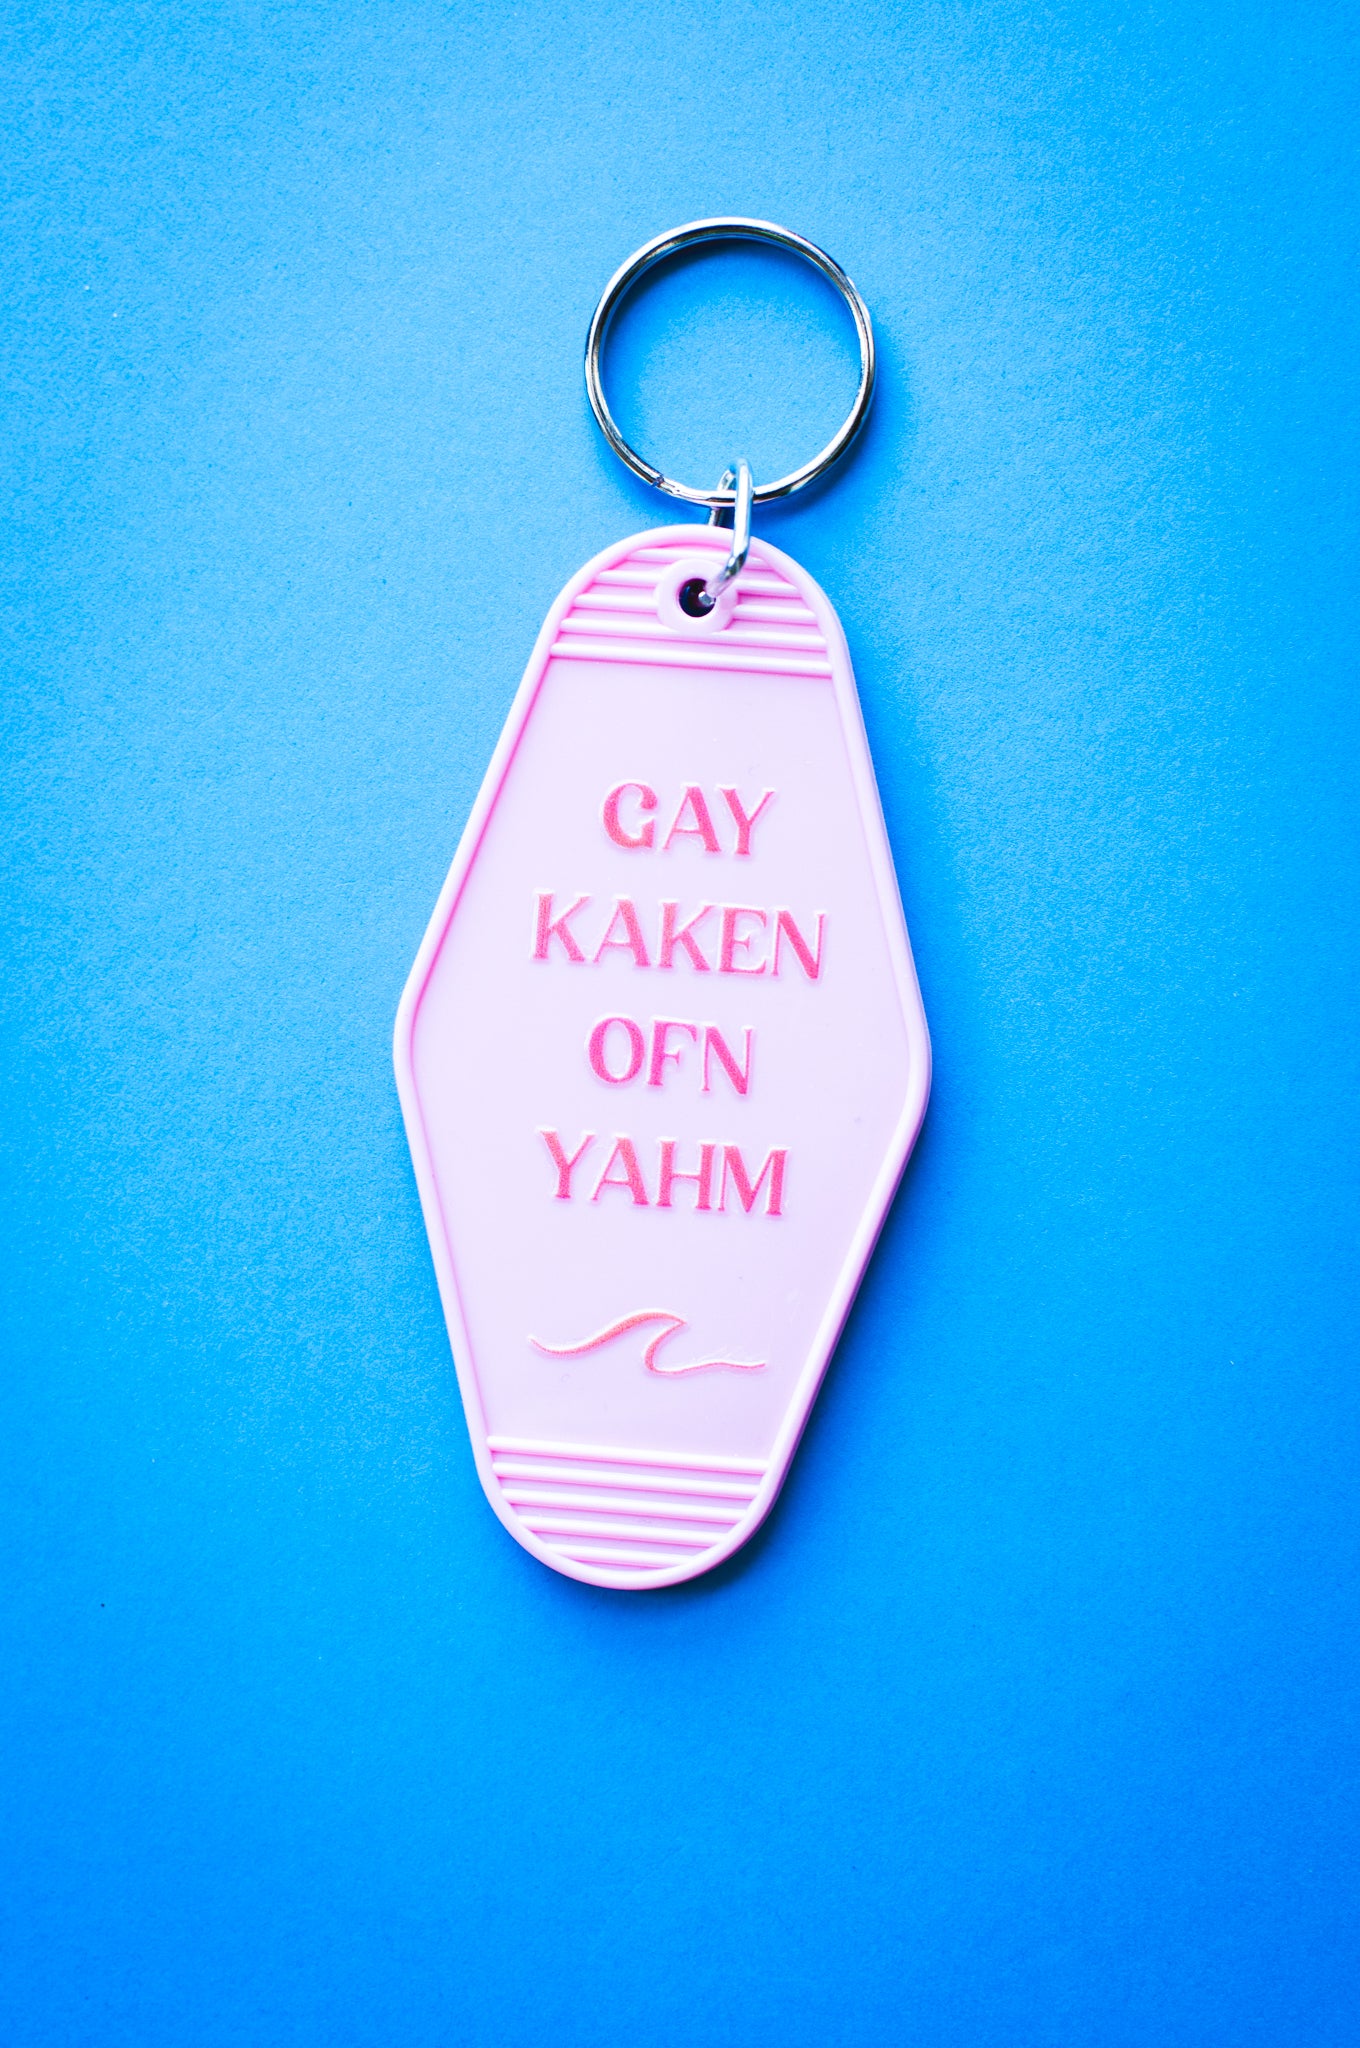 Gay Kaken Ofn Yahm